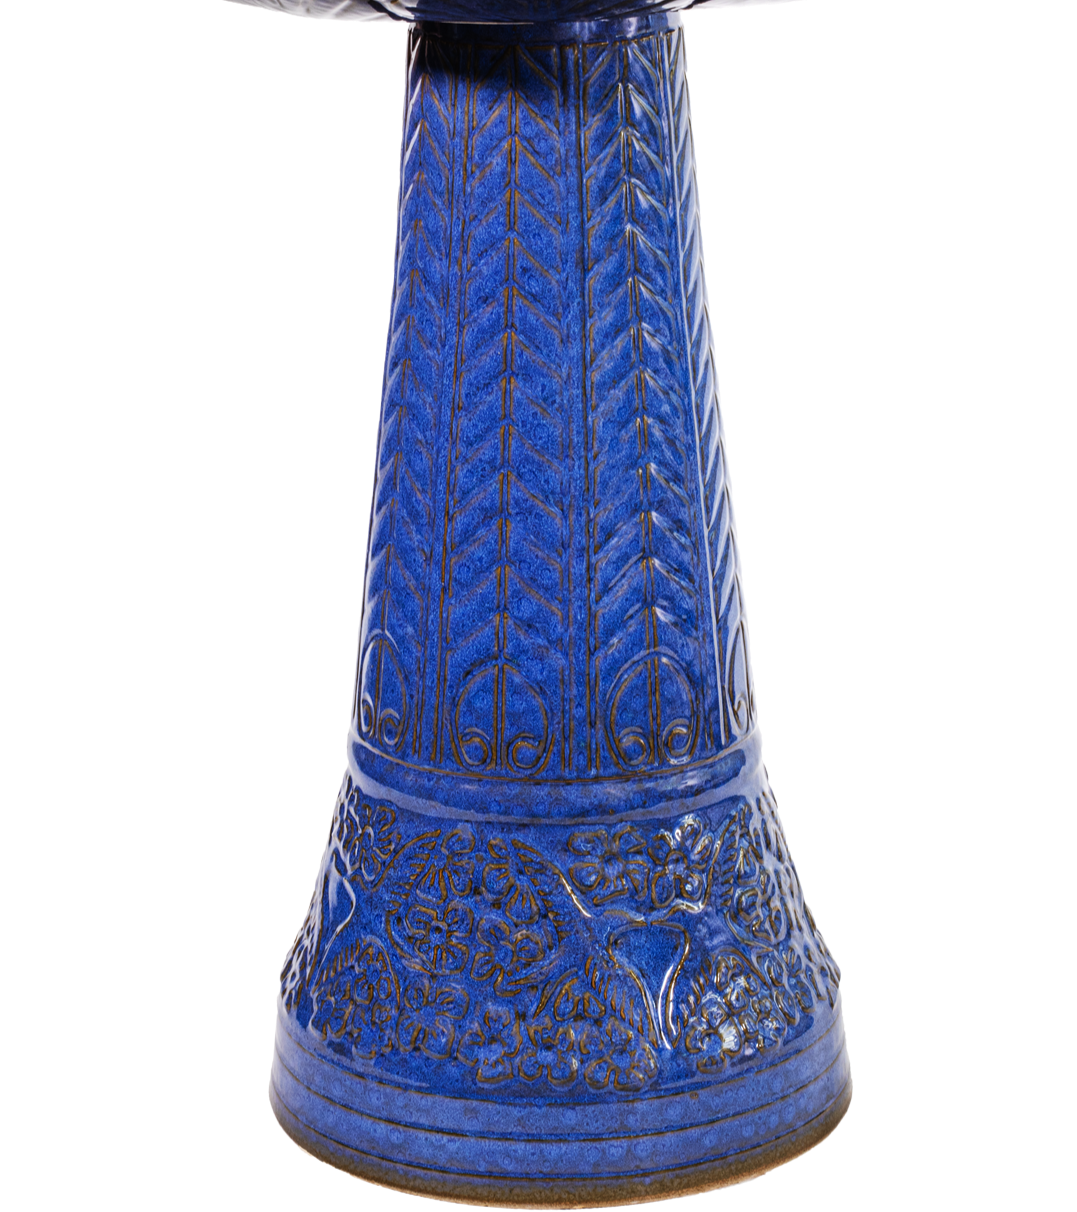 ceramic blue birdbath pedestal with birds flowers and a chevron design